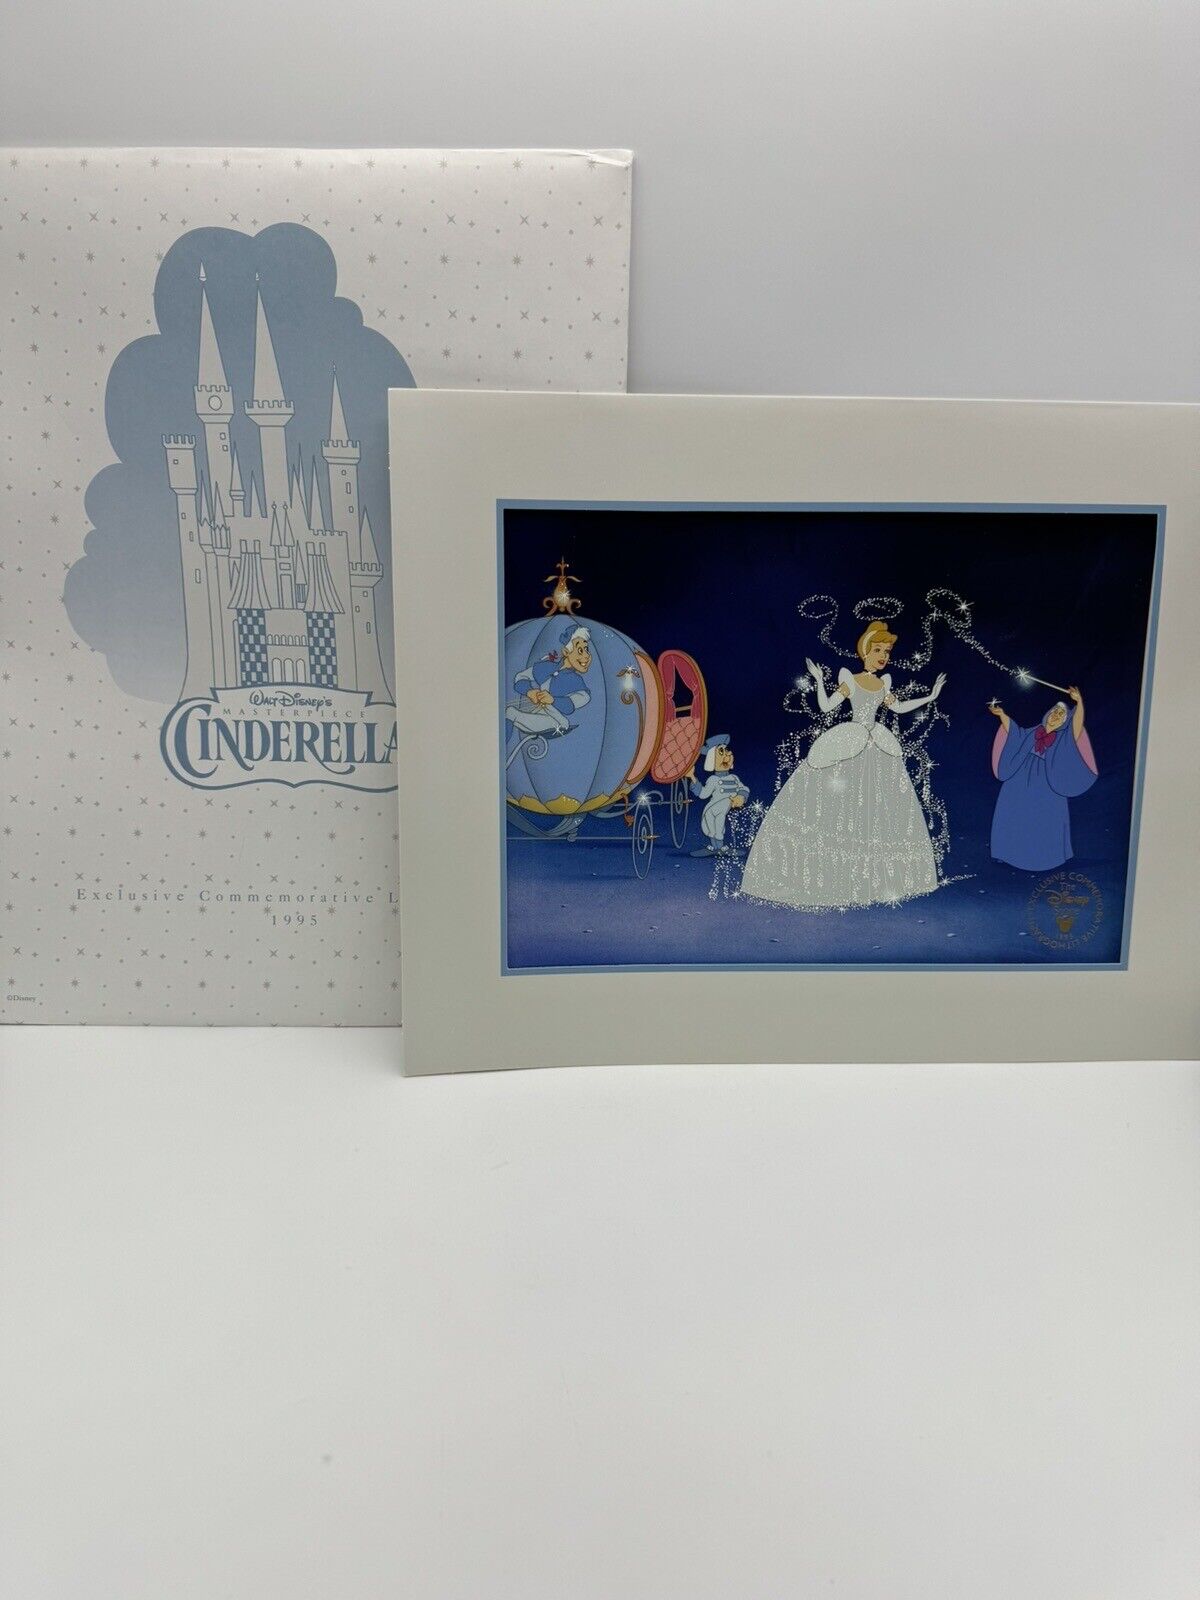 Disney Cinderella Exclusive Commemorative Lithograph Picture Print Vintage 1995